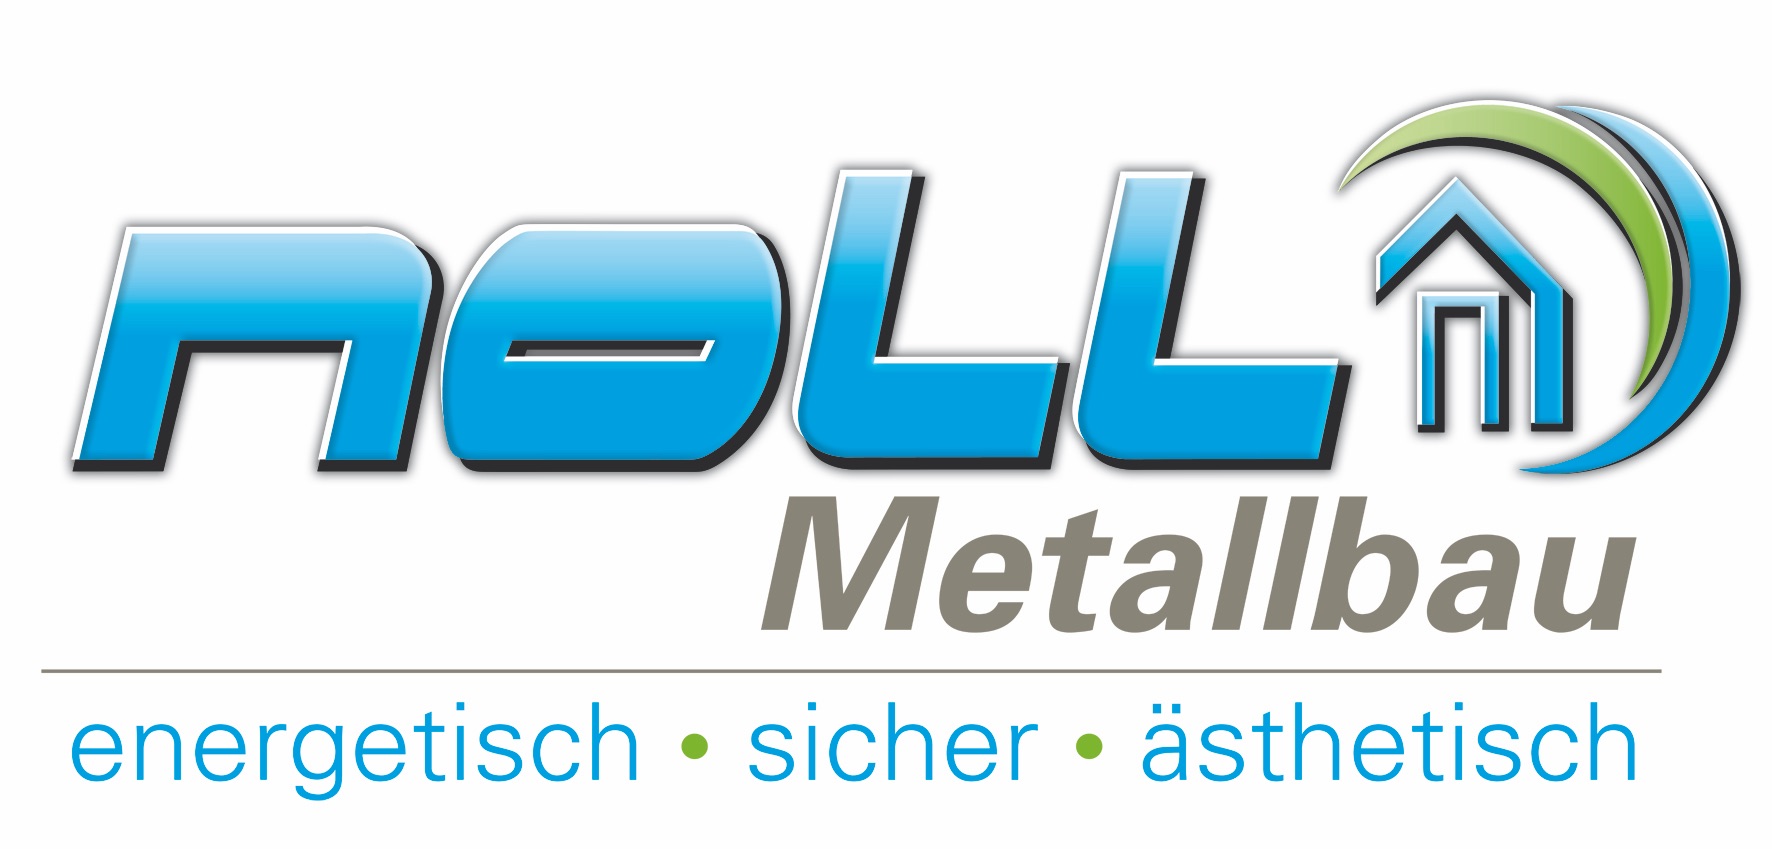 Logo Noll GmbH